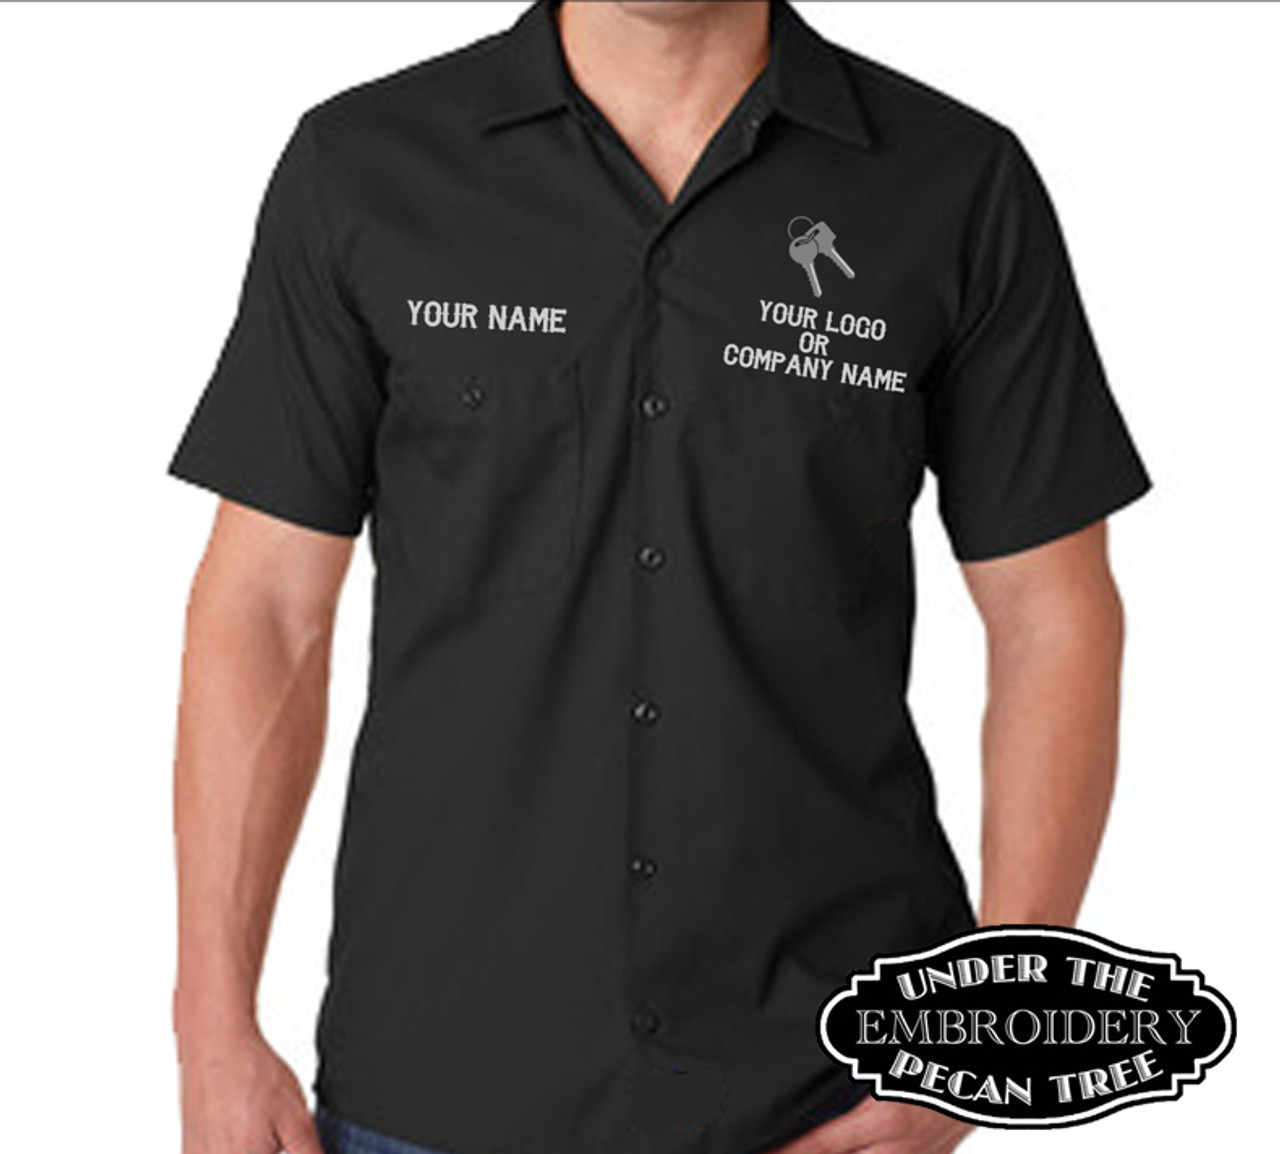 Red Kap Men's Short Sleeve Industrial Work Shirt - Navy